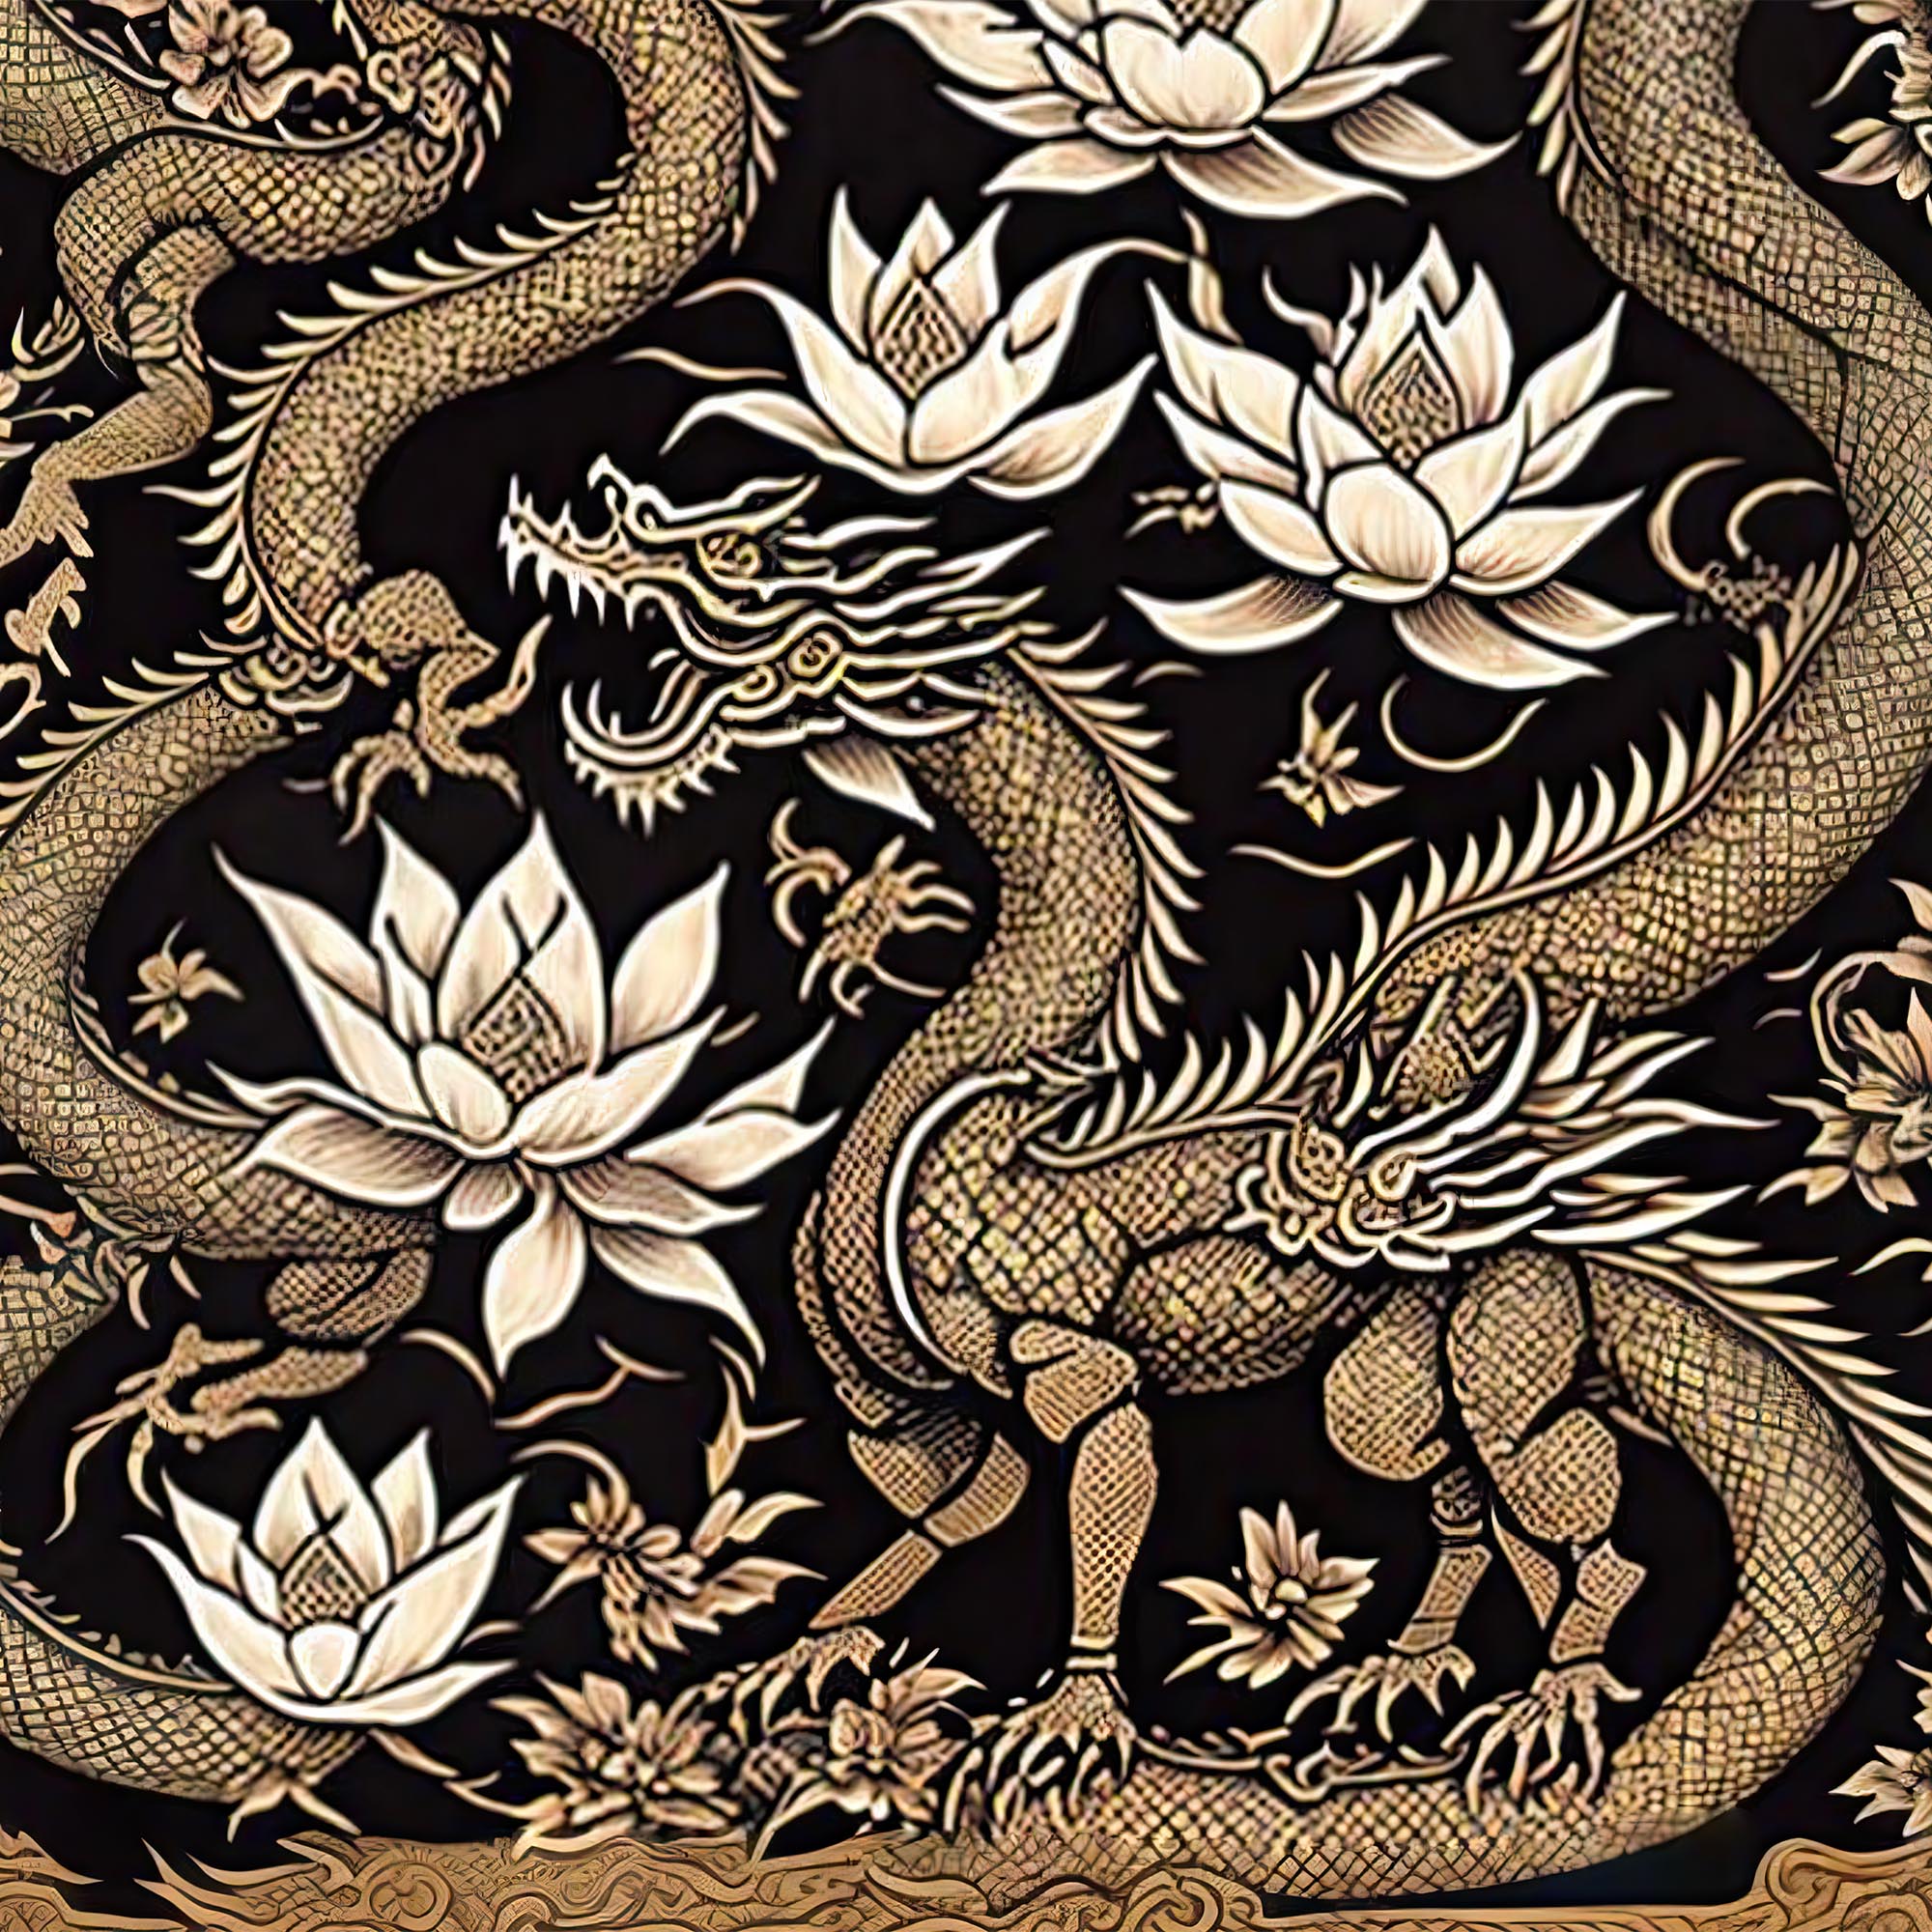 T-shirt Medieval Basilisk: Ancient Greek Mythology | King of Serpents, Snakes | Golden Scaled Dragon, Reptile Graphic Art T-Shirt